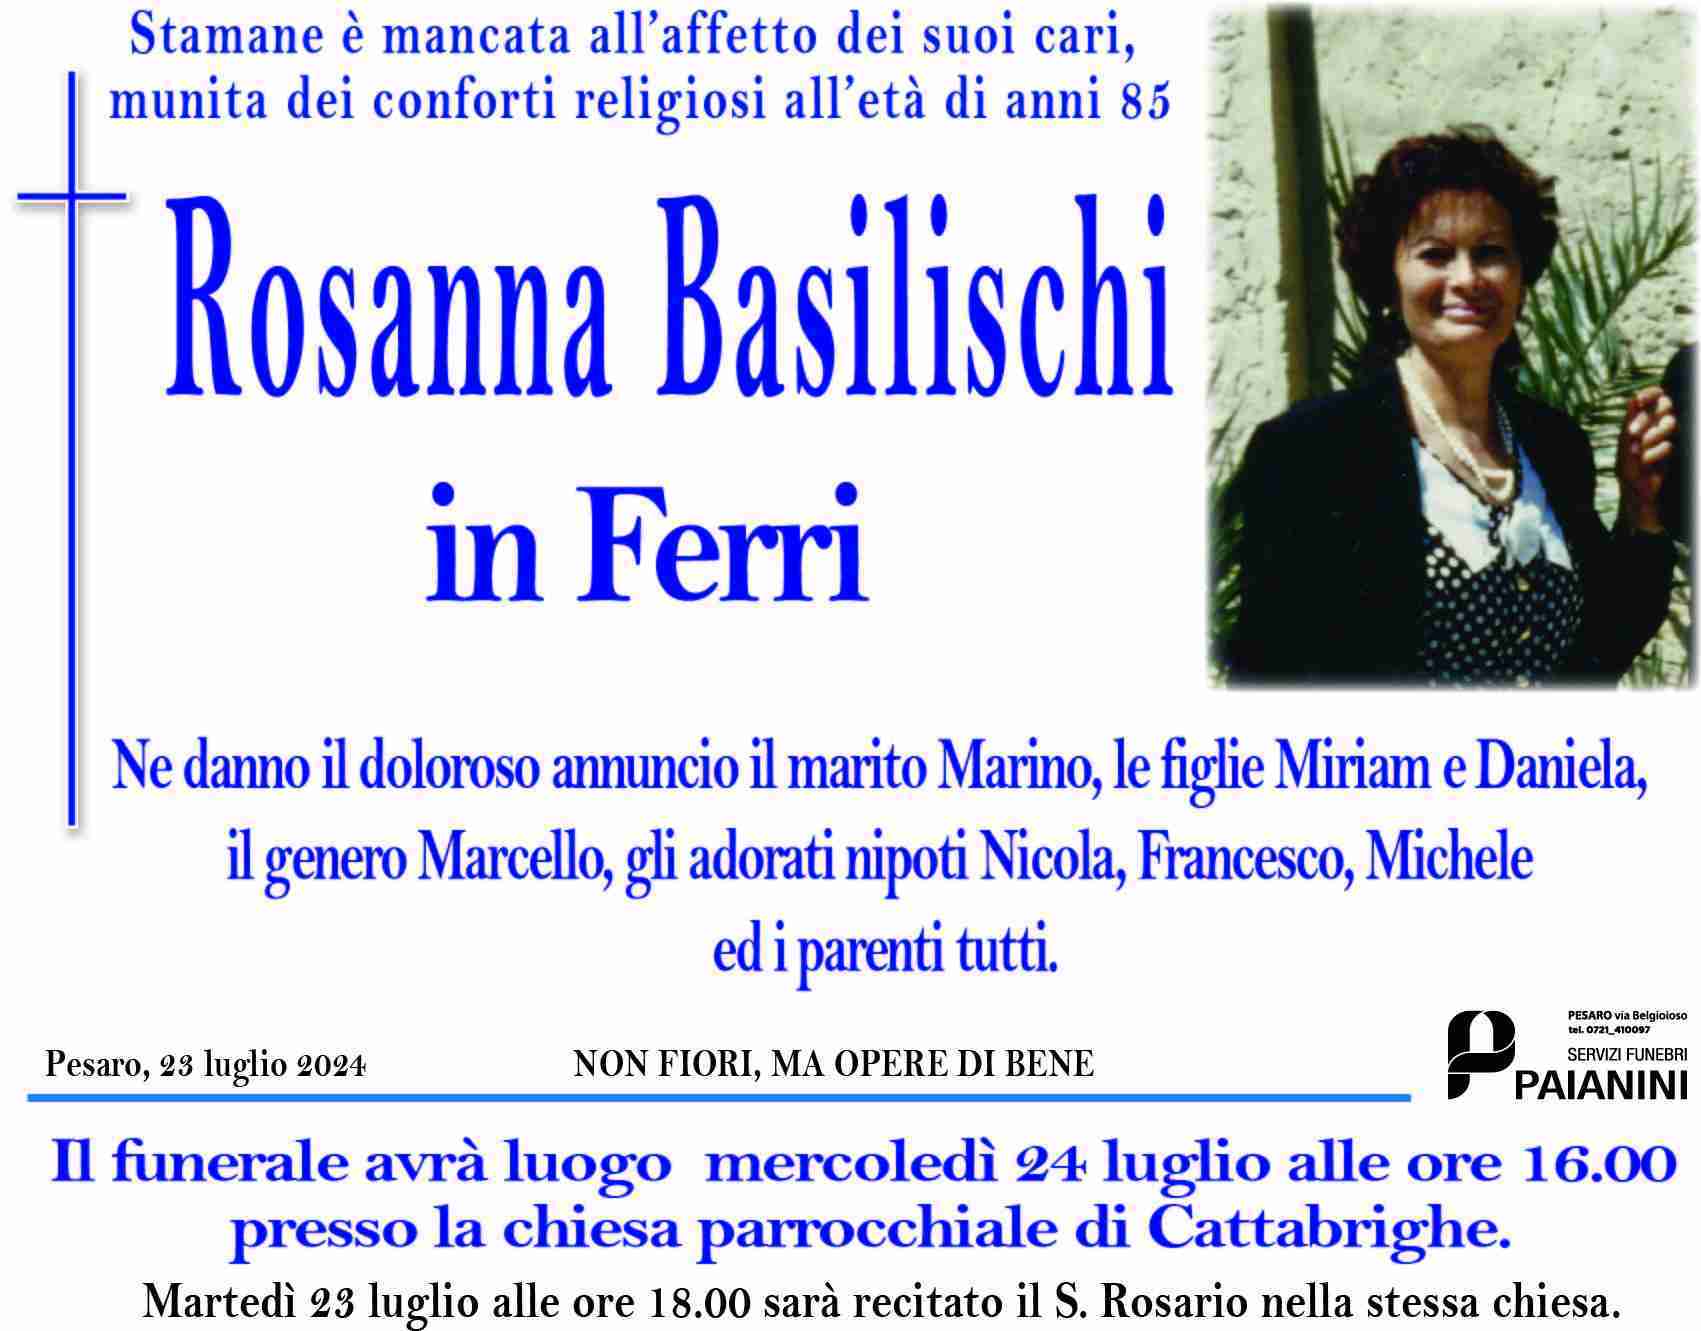 Rosanna Basilischi